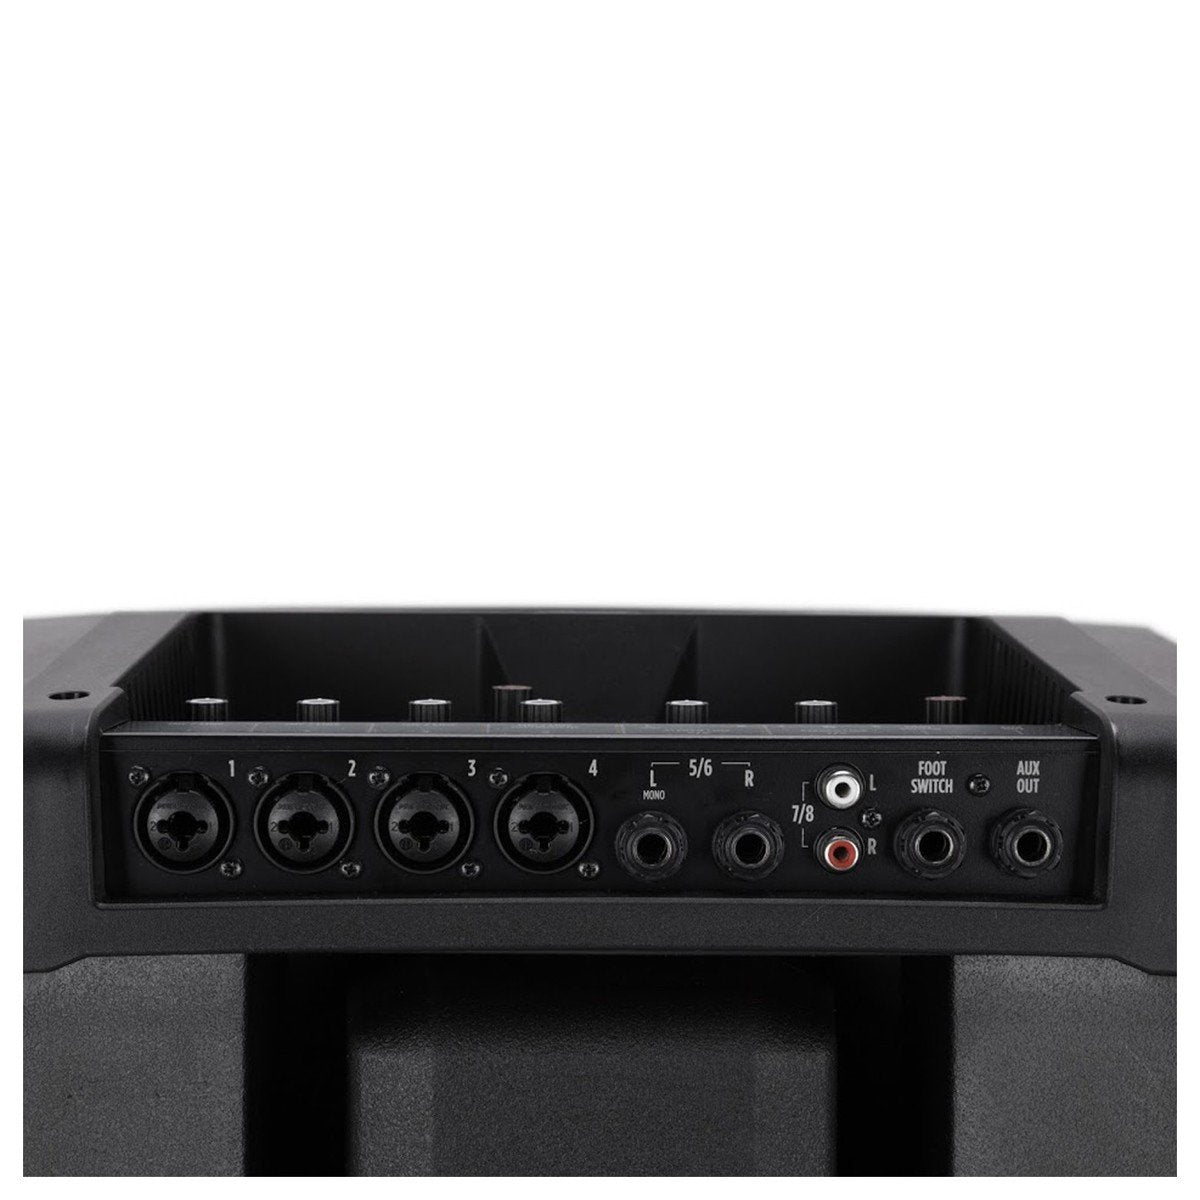 RCF Evox JMIX8 Active 2 Way Portable Array System (Pair) - DY Pro Audio